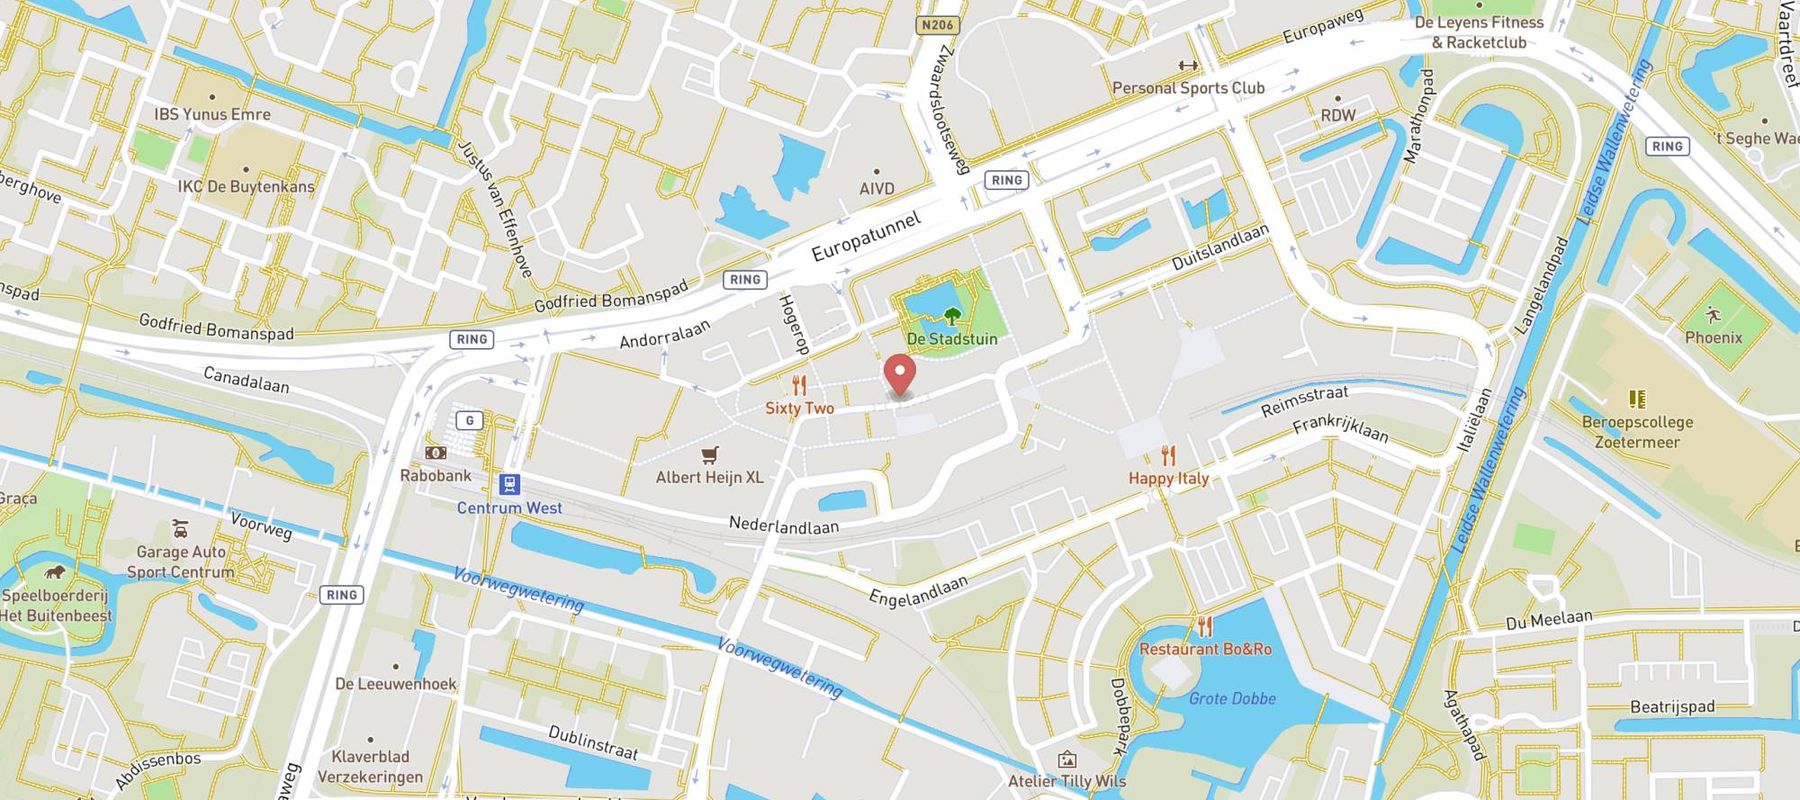 Pearle Opticiens Zoetermeer - Stadshart map